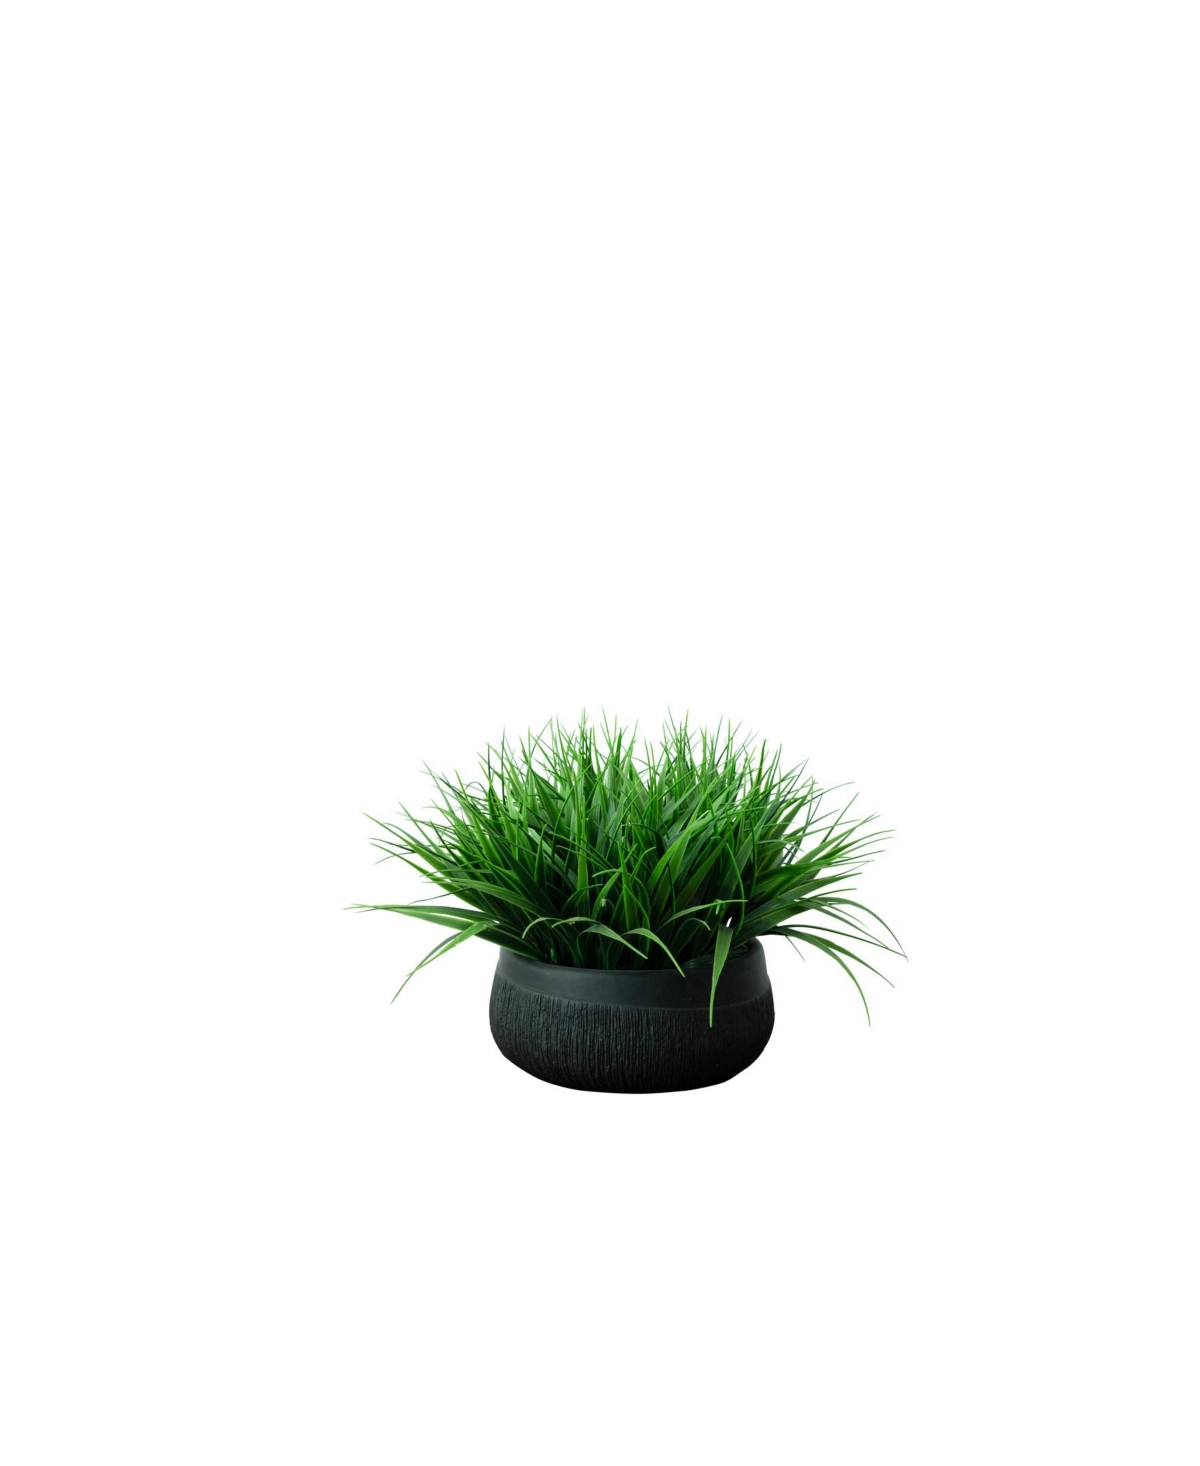 Desktop Artificial Grass Bowl in Decorative Pot - Black